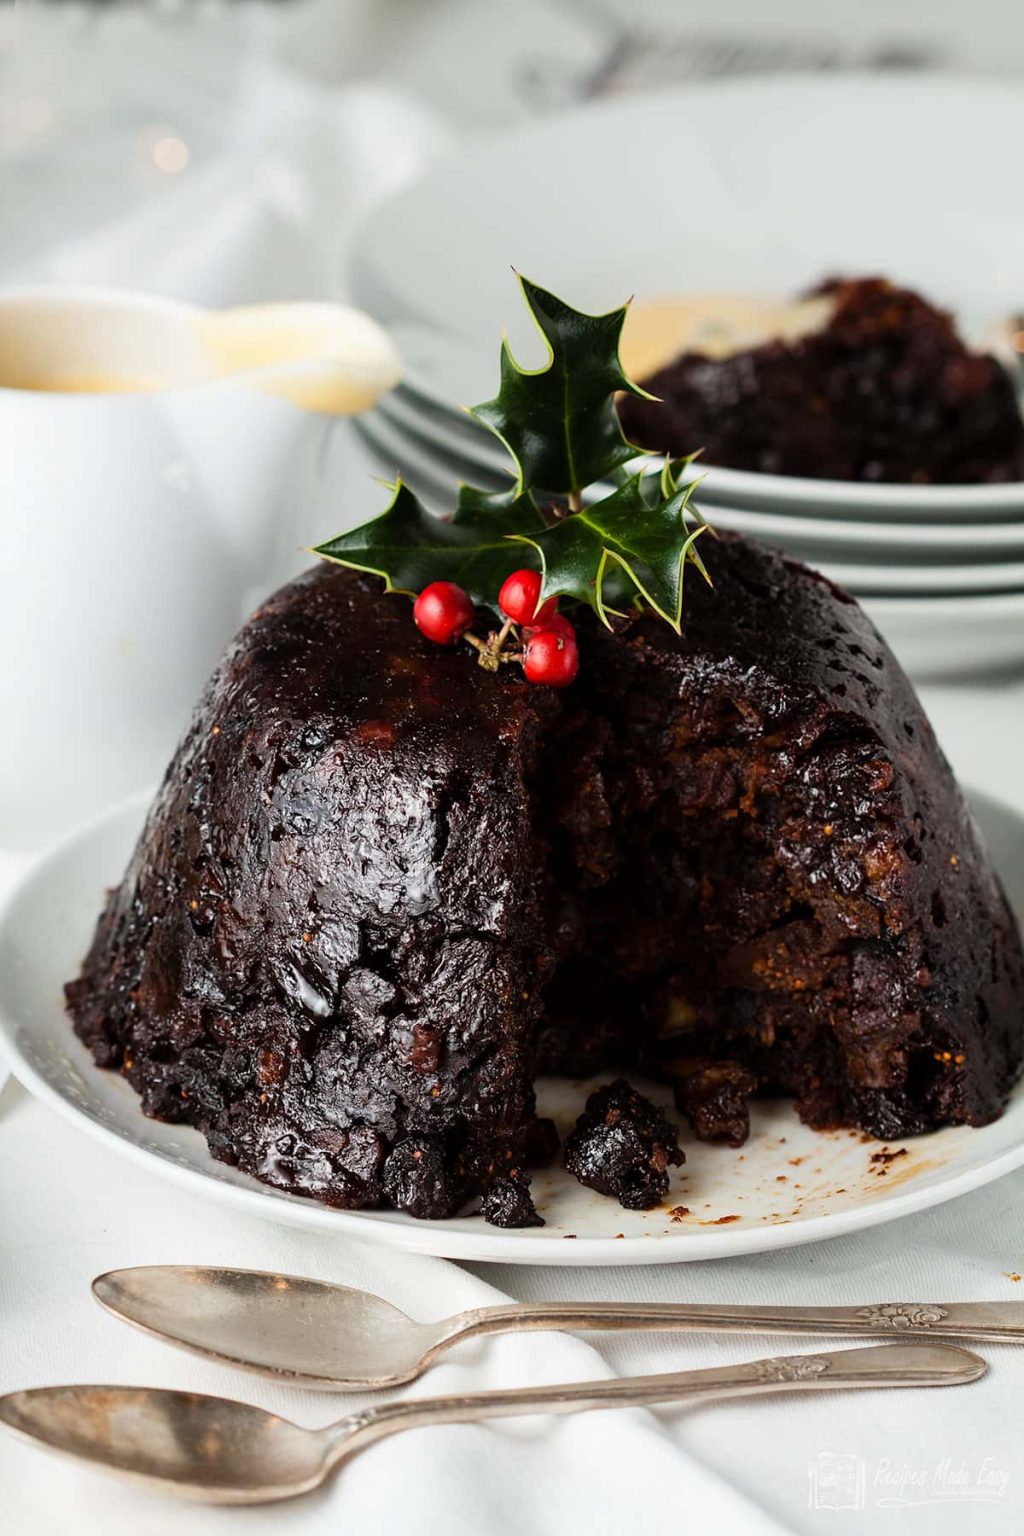 Traditional Christmas pudding | Recipes Made Easy